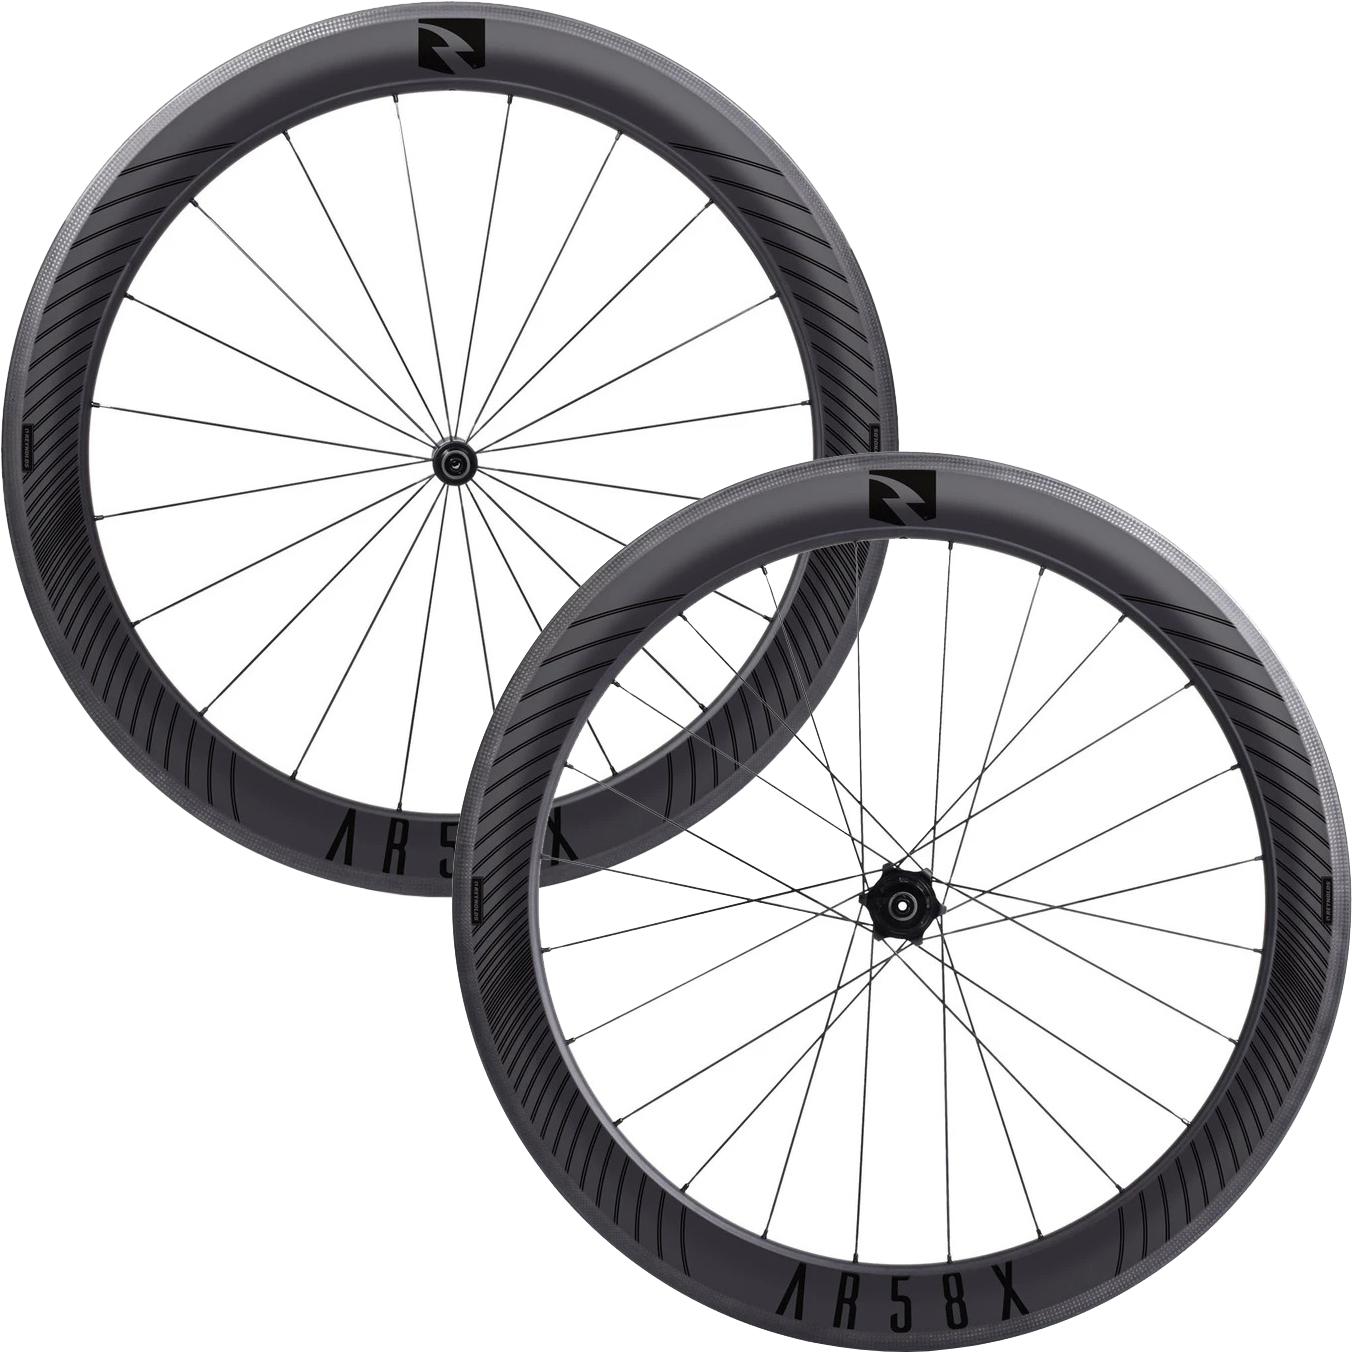 Reynolds Arx 58 Carbon Wheelset - Black